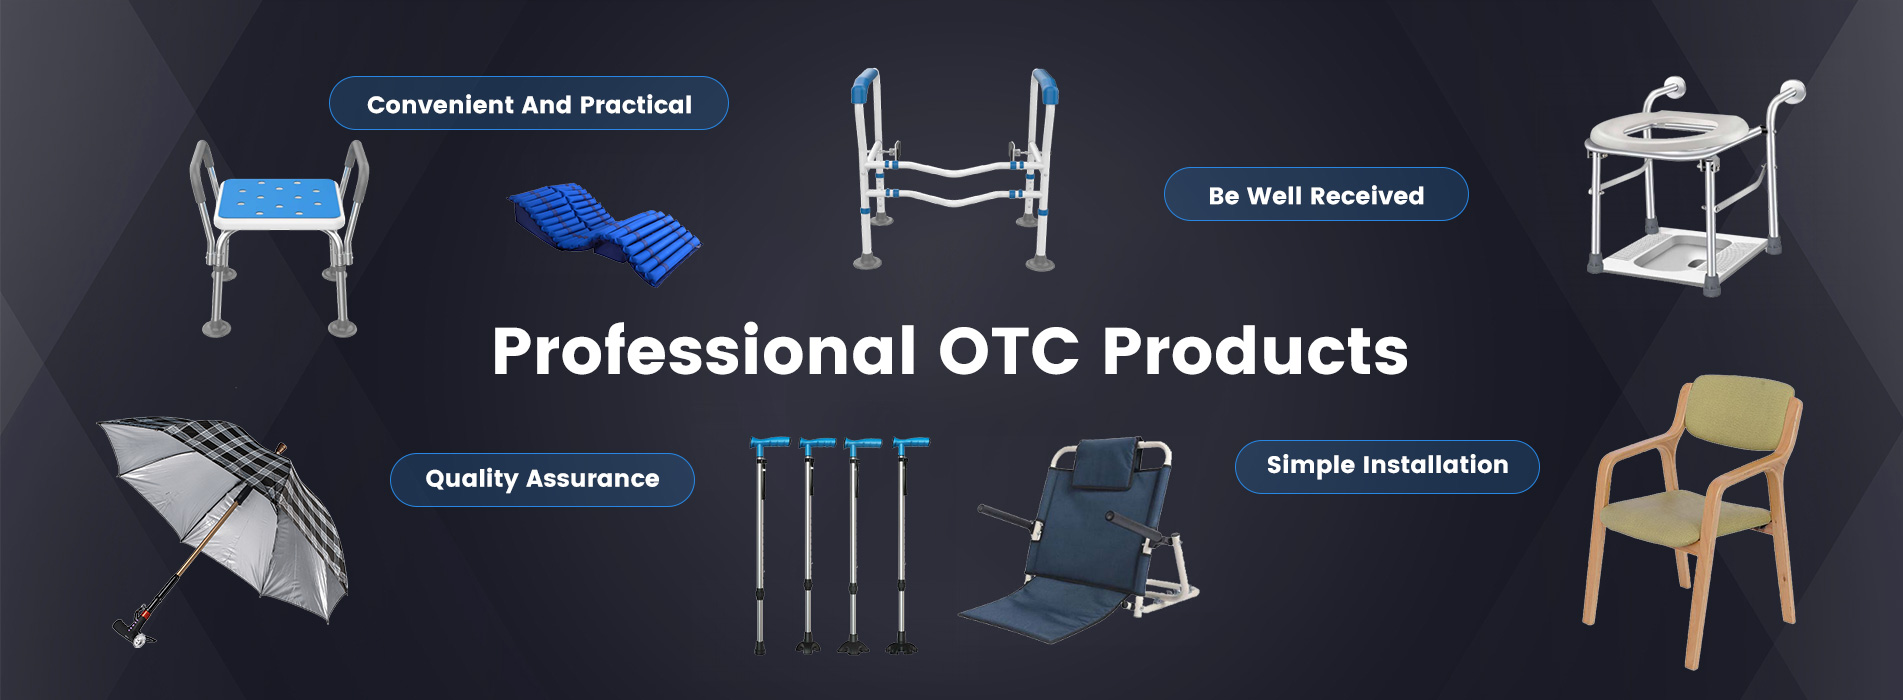 Professional OTC Products